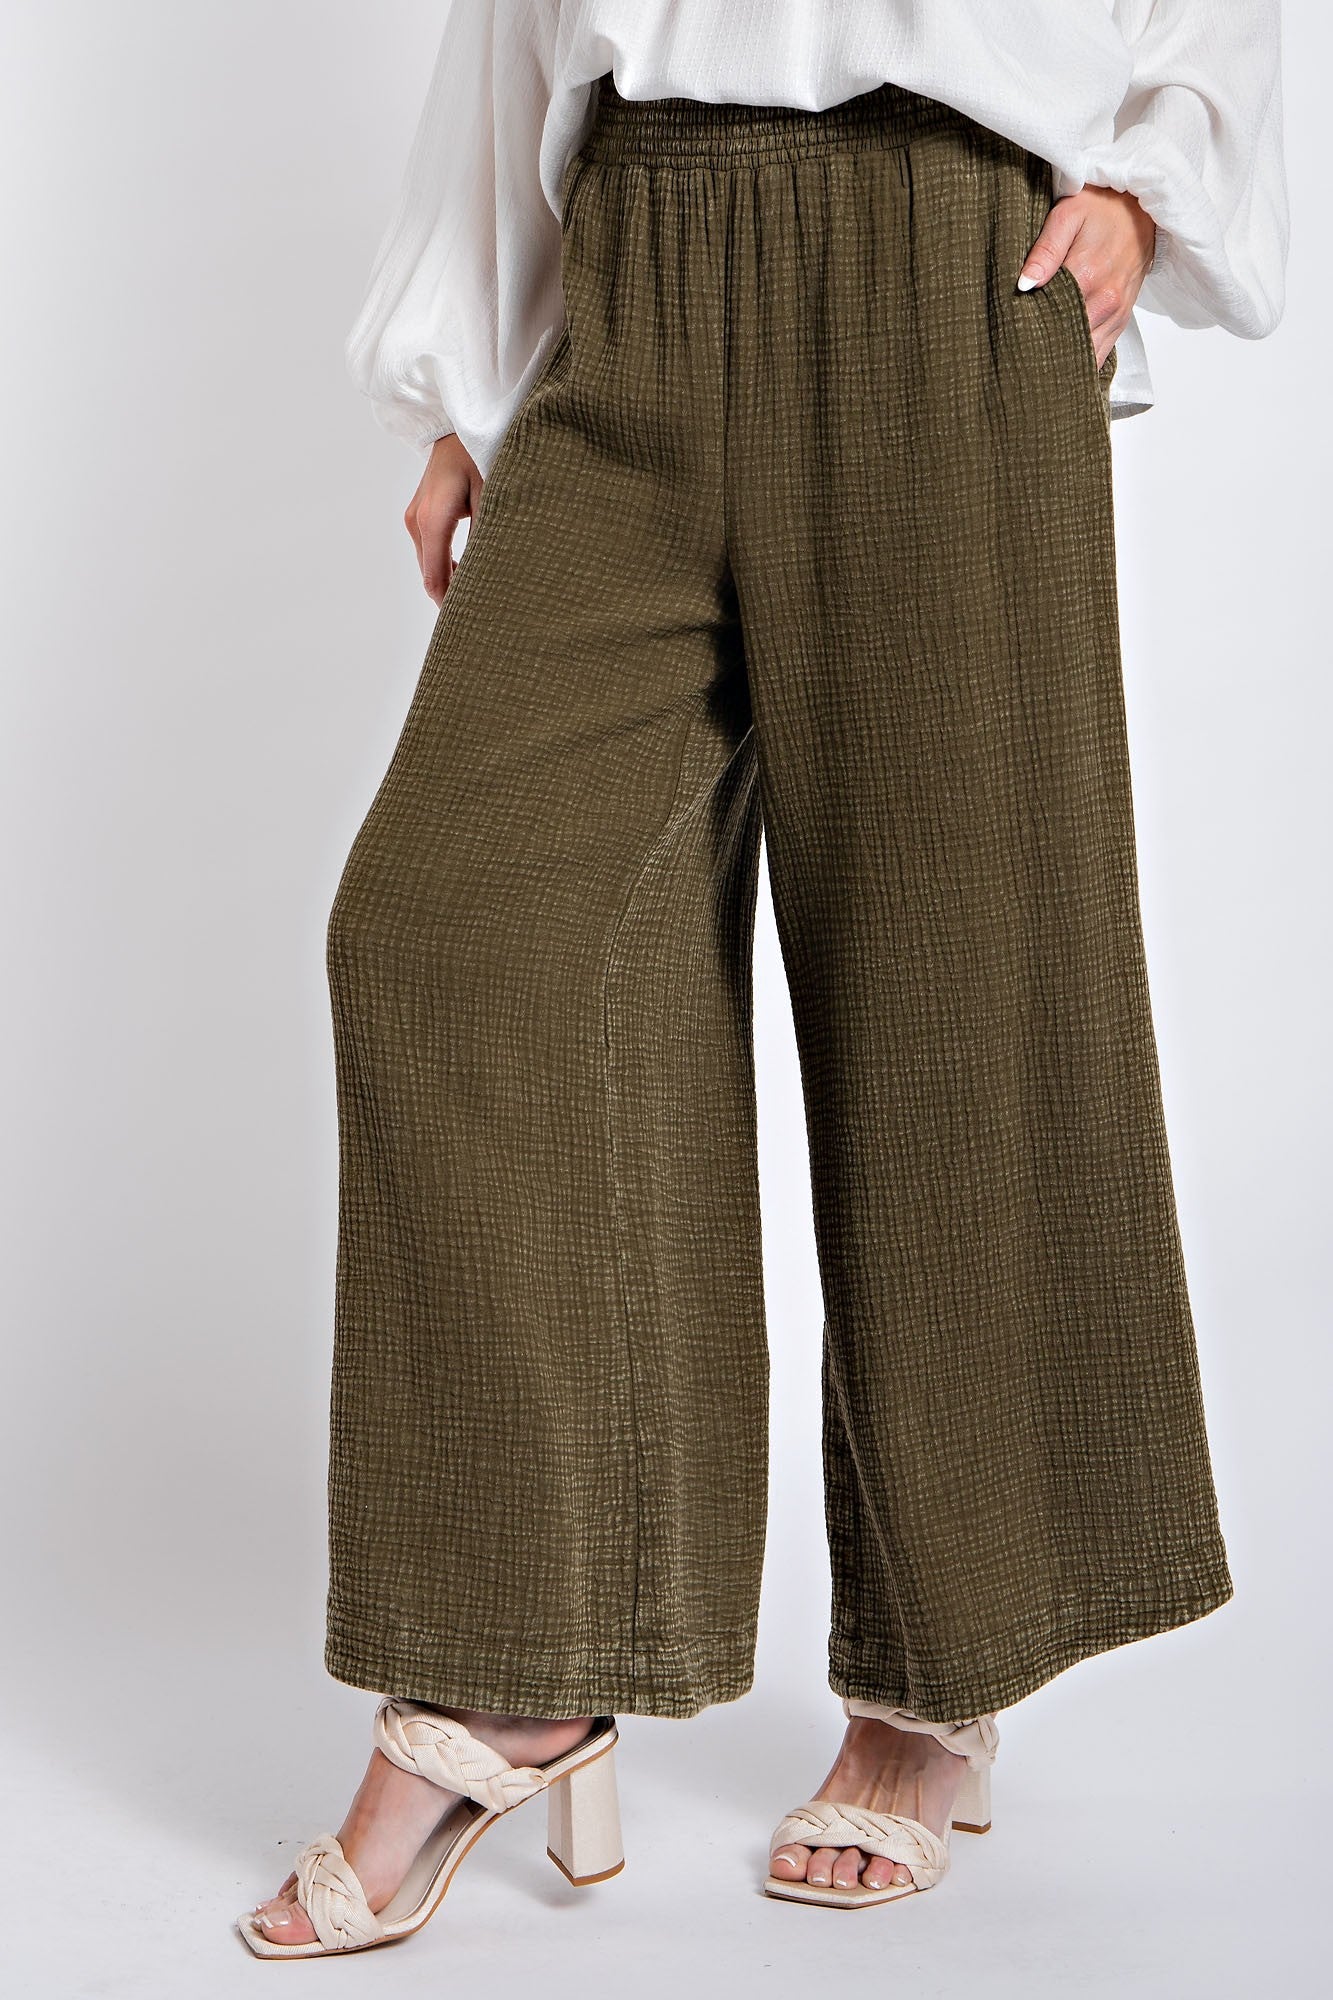 Easel Cotton Gauze Pants in Olive – June Adel